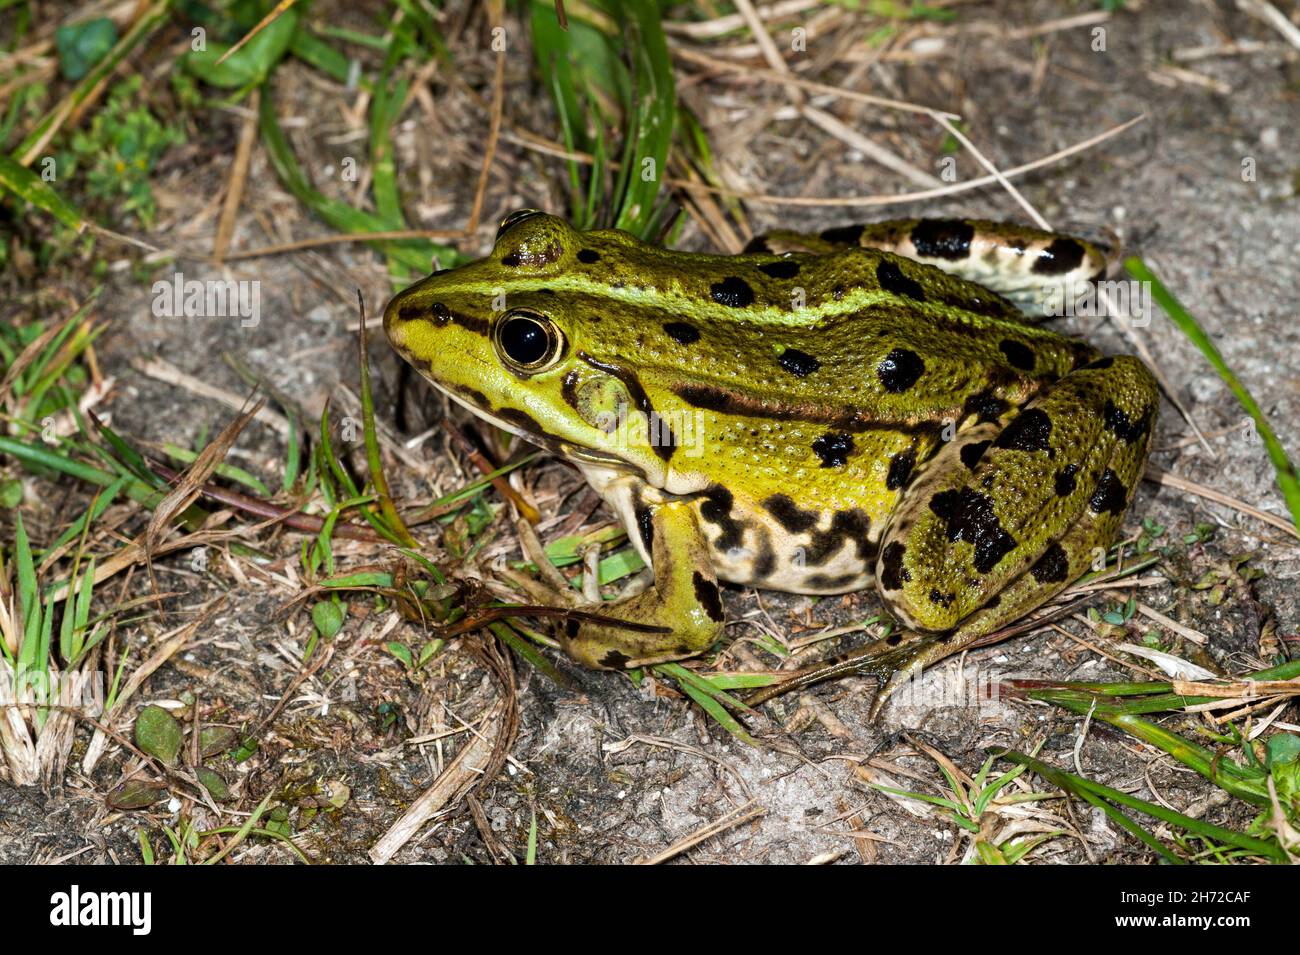 Marsh frog (Pelophylax ridibundus / Rana ridibunda) on land, water frog native to Europe Stock Photo